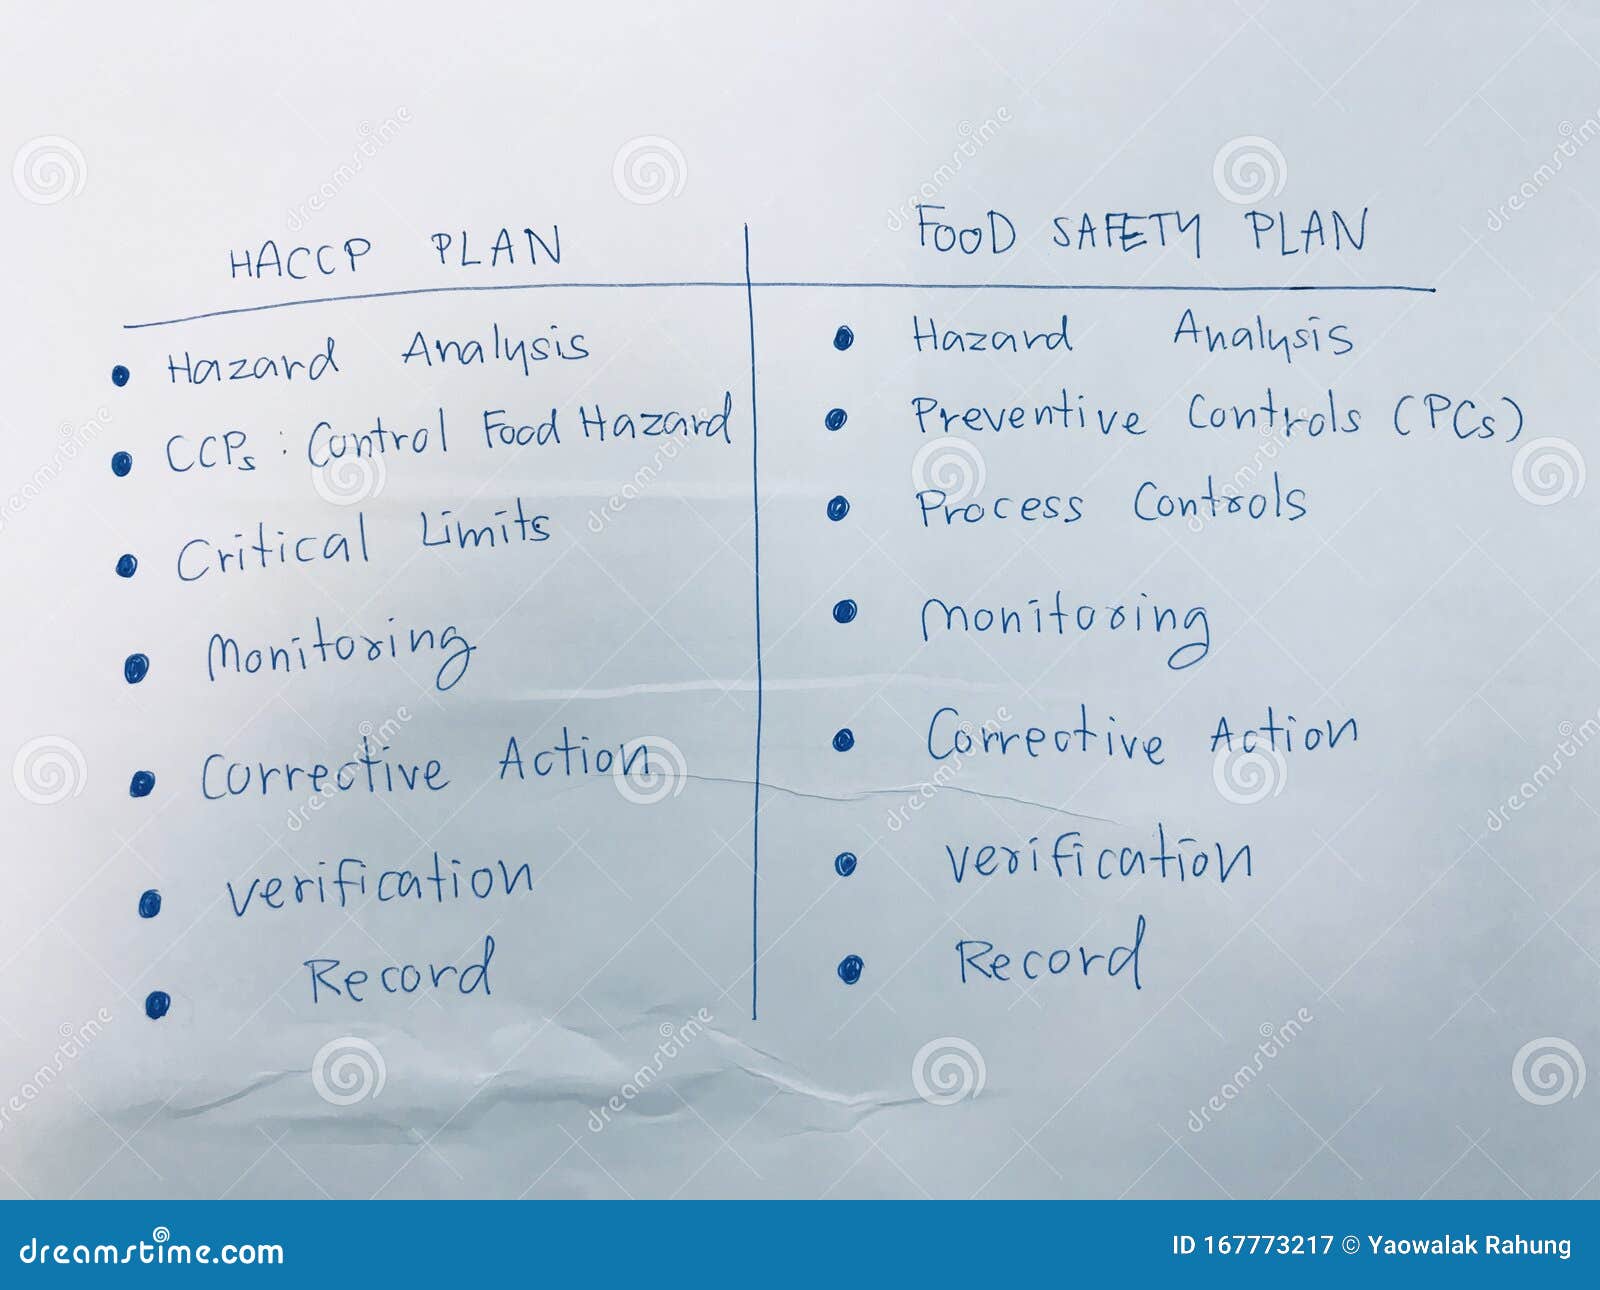 Haccp Plan Vs Food Safety Plan Stock Image - Image of monitoring